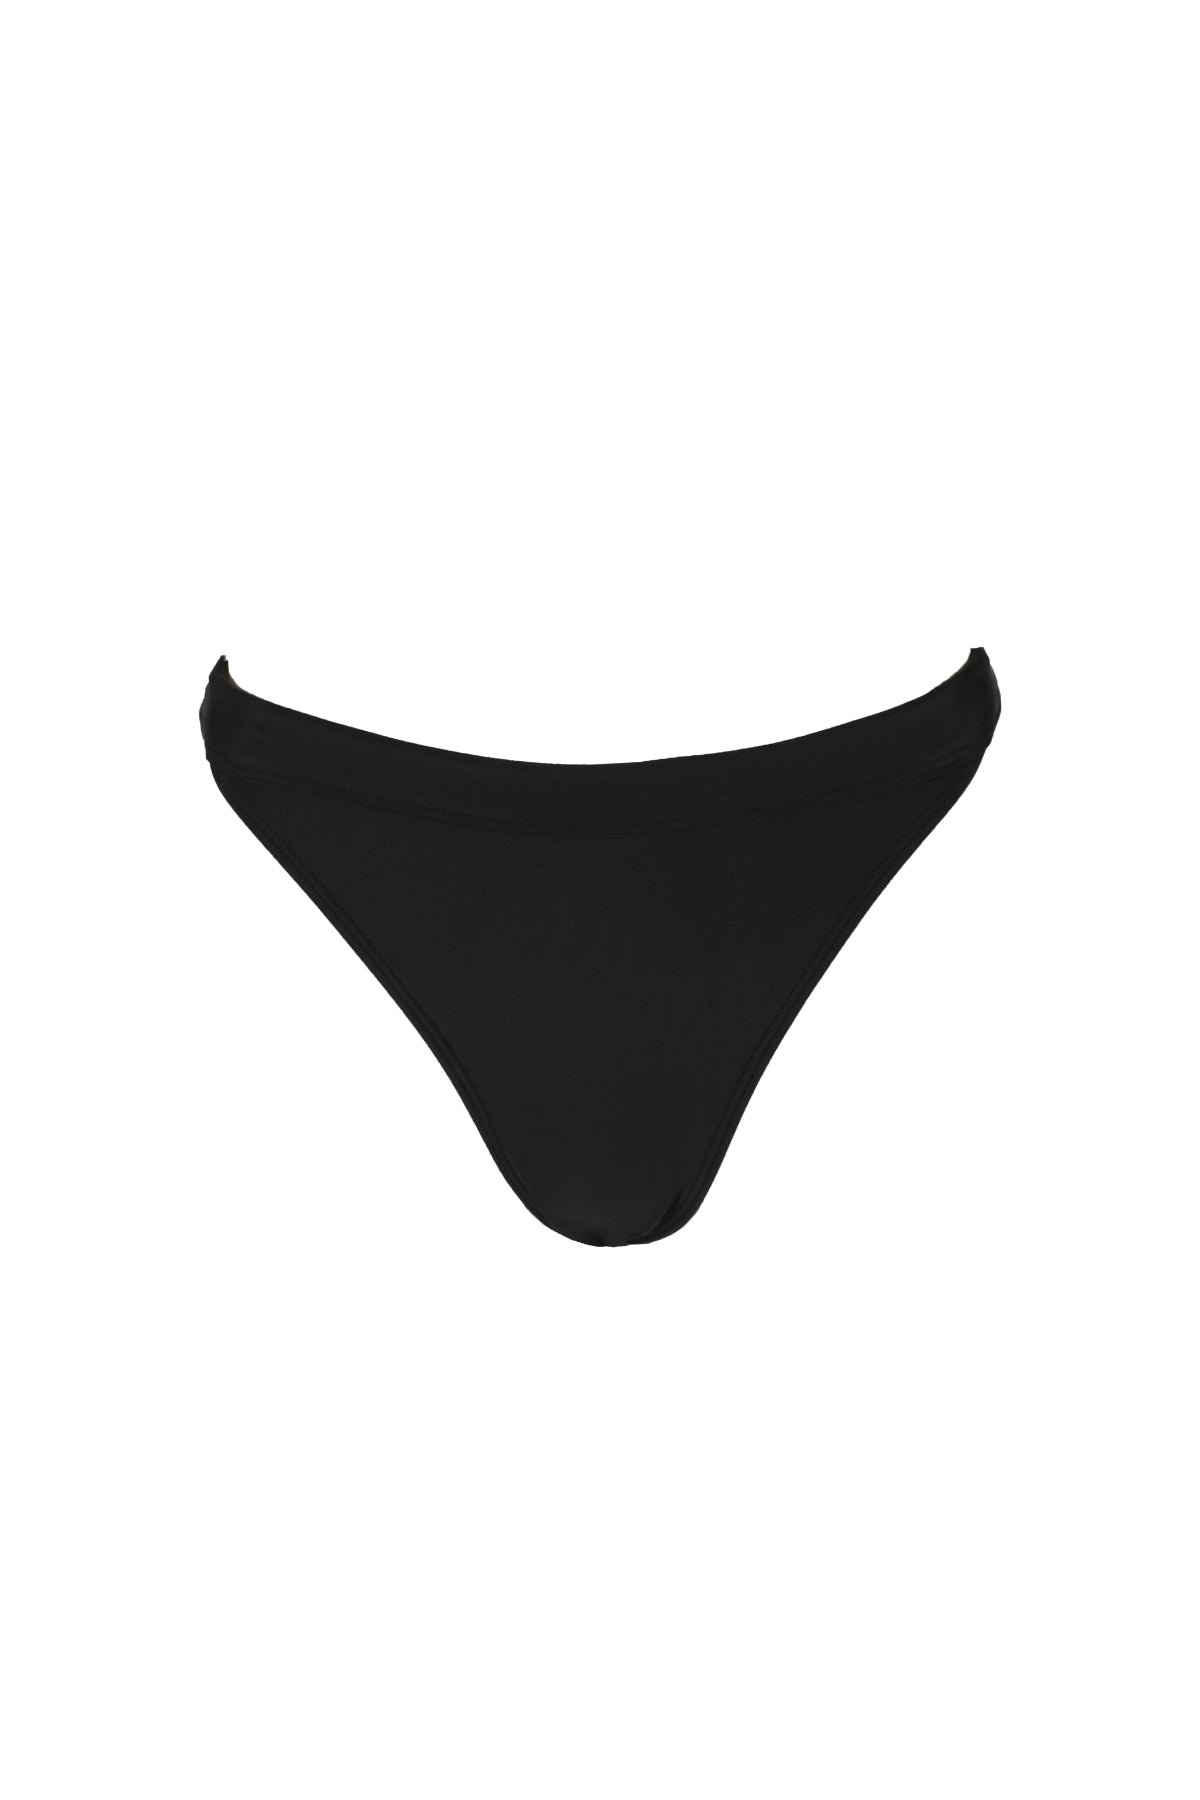 Hedy mid rise bikini bottoms in black from luxury sustainable swimwear brand Koraru